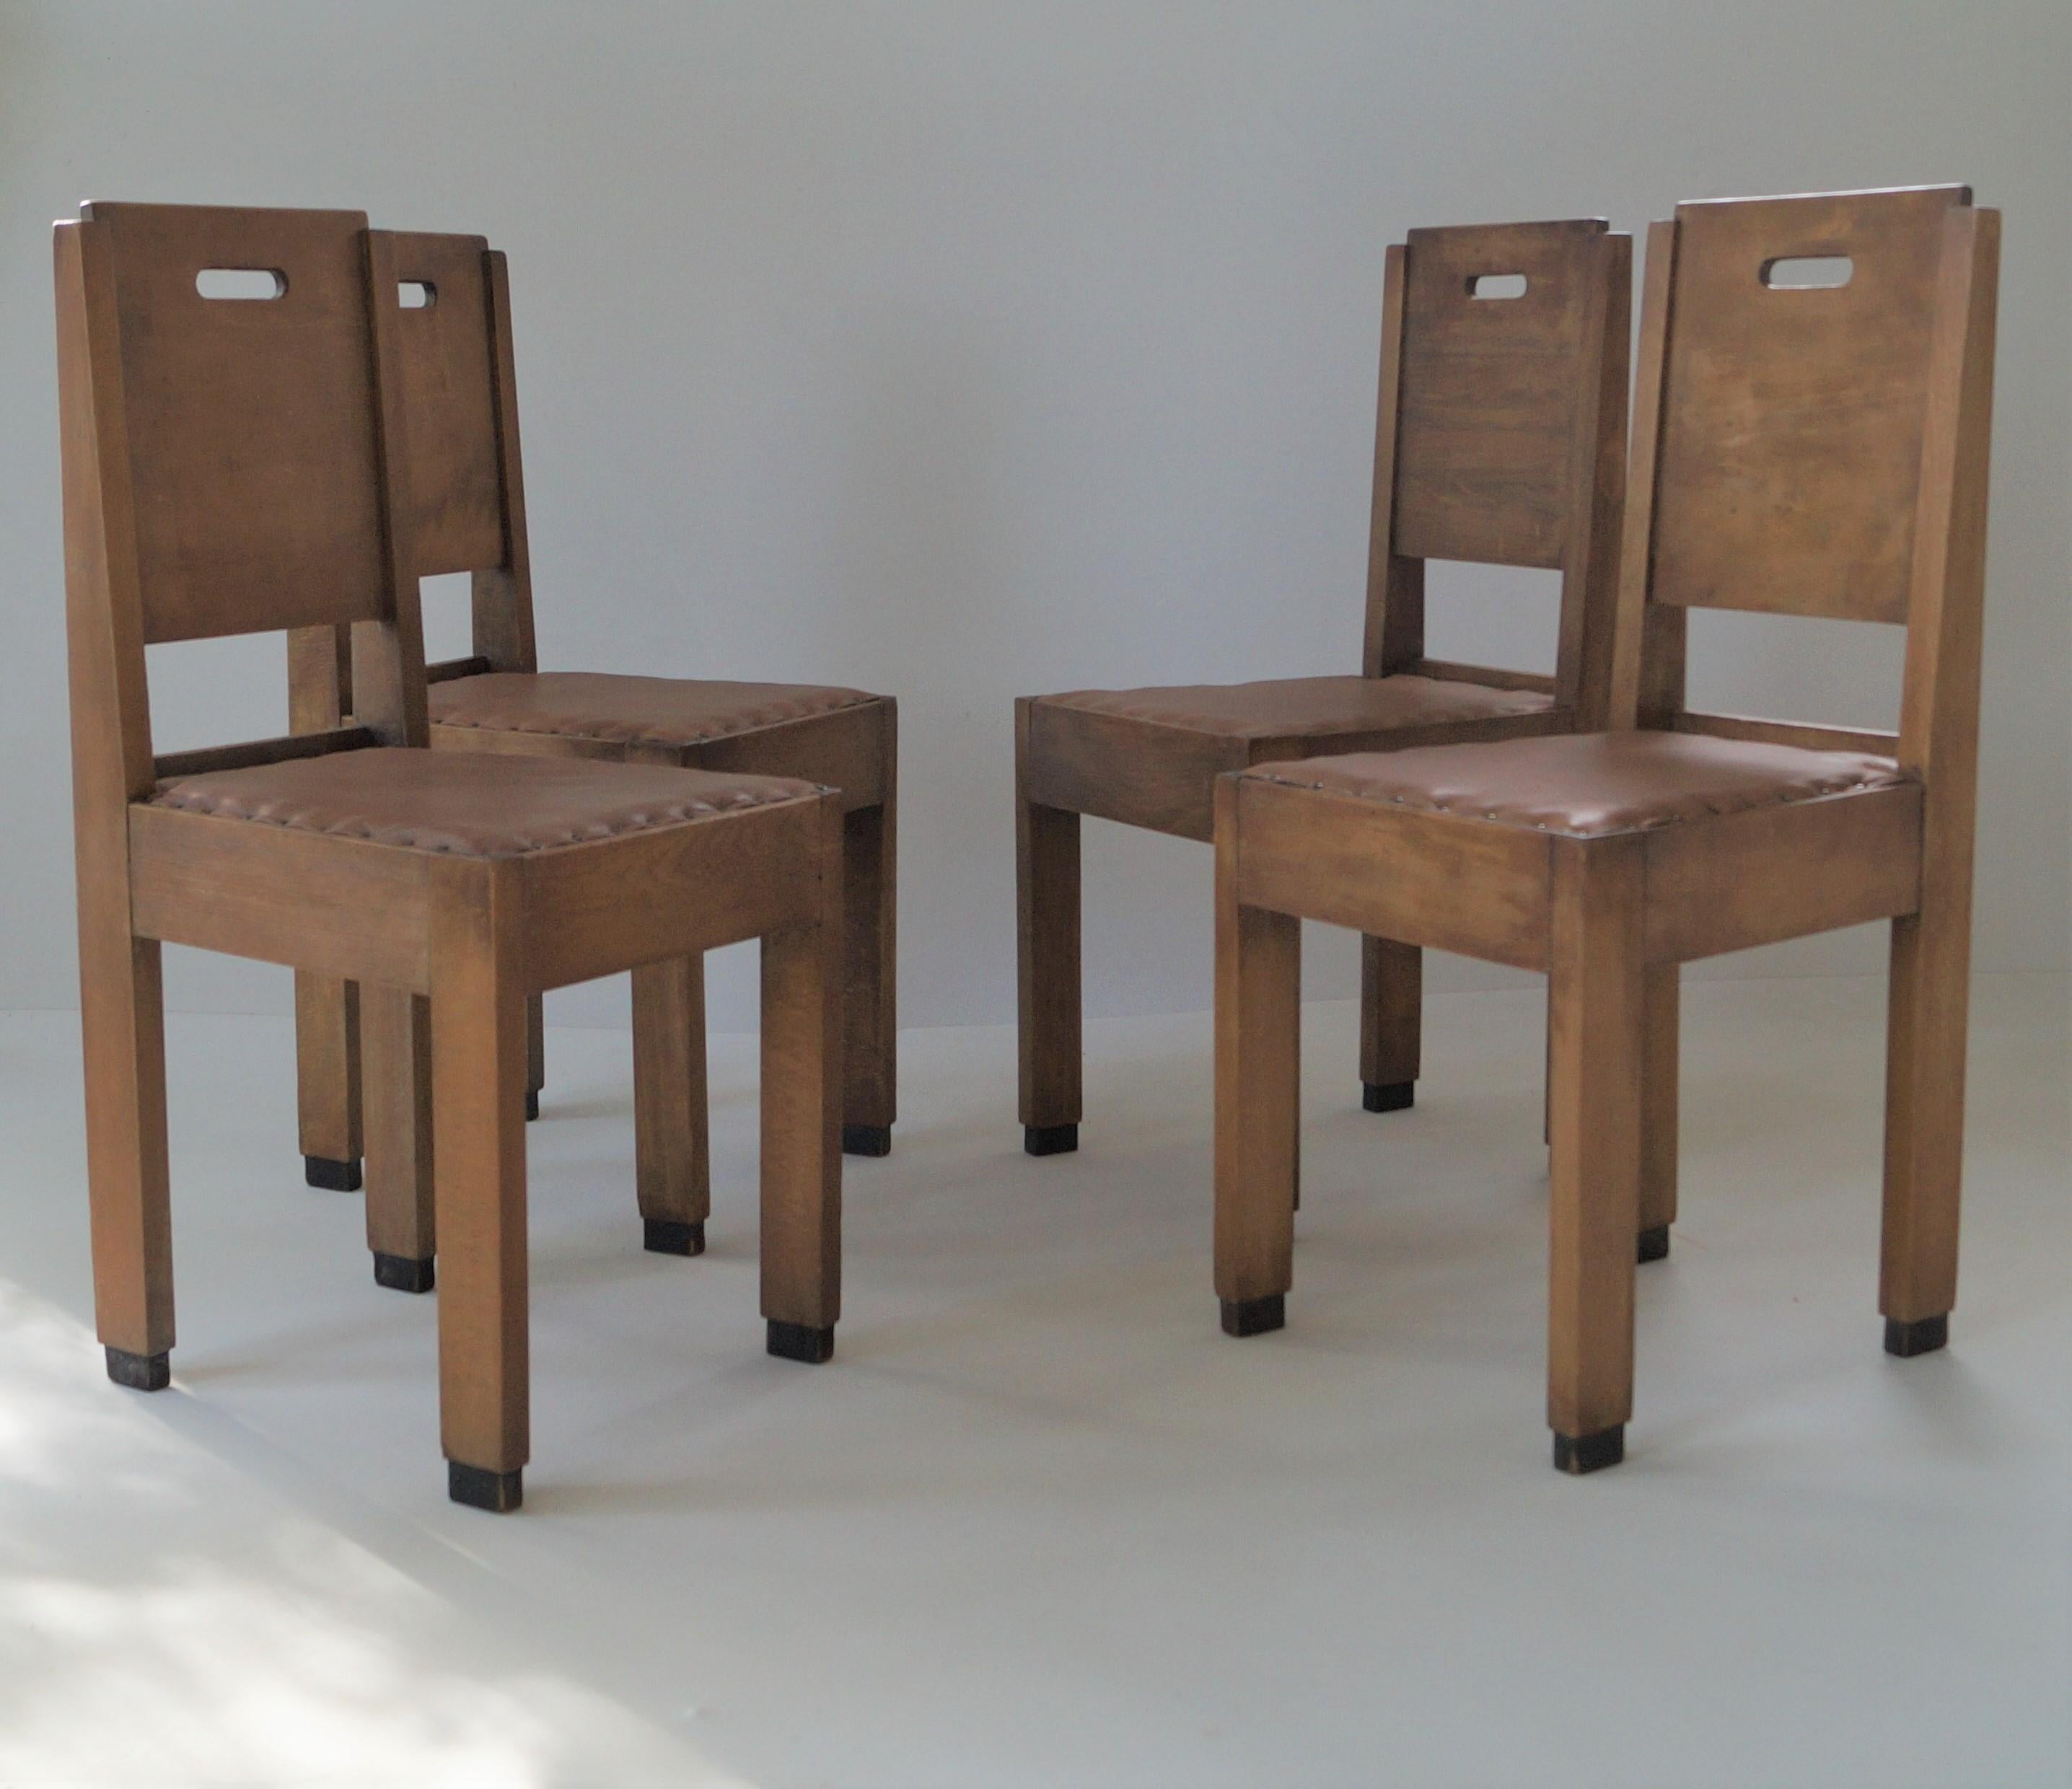 Dutch Art Deco De Stijl/Haagse School set of chairs, 1920s For Sale 1